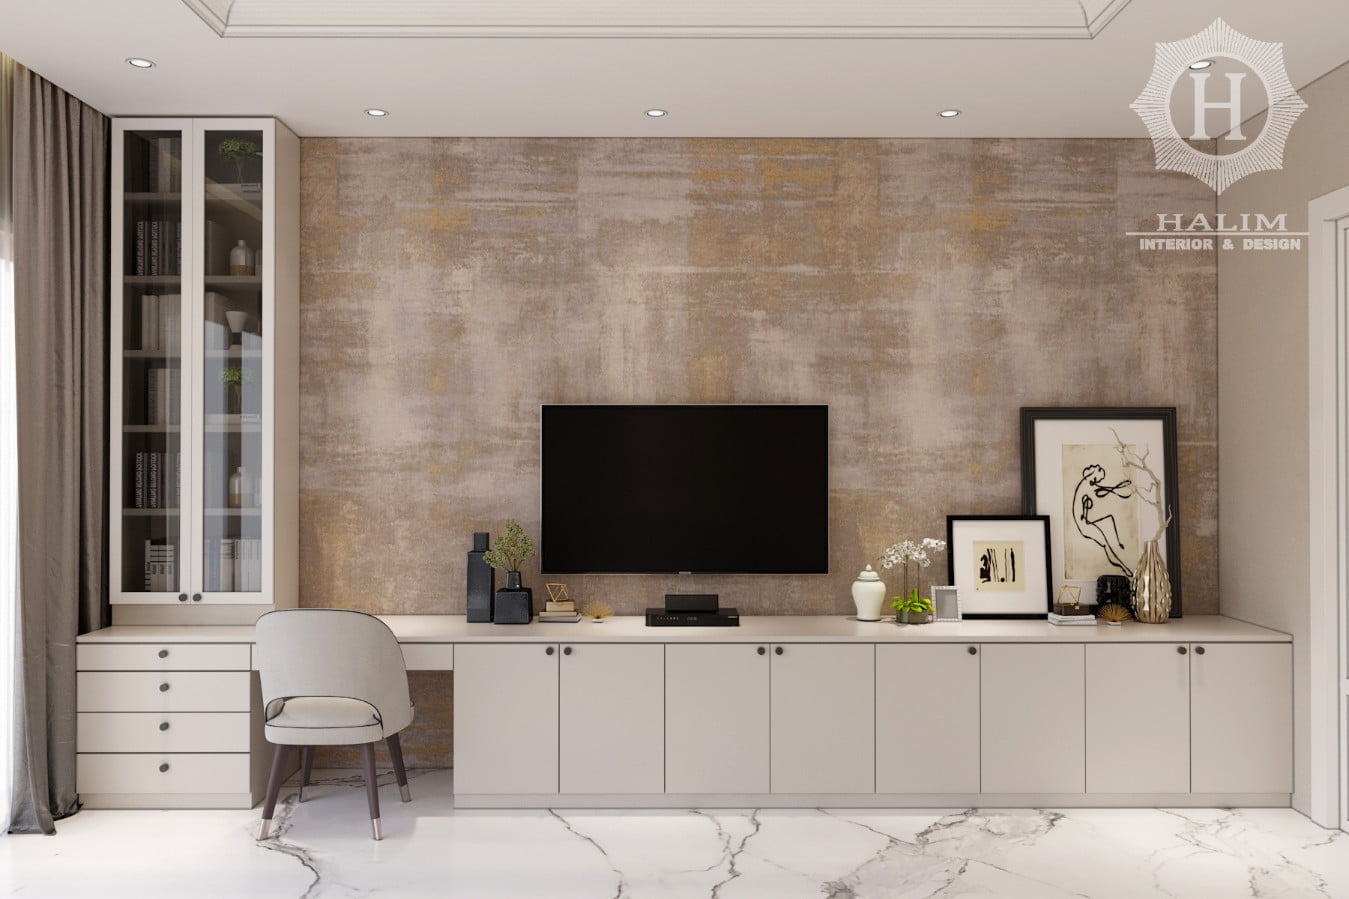 Halim Interior modern furniture contemporer american style minimalist european classic surabaya 34.CITRALAND GB 2